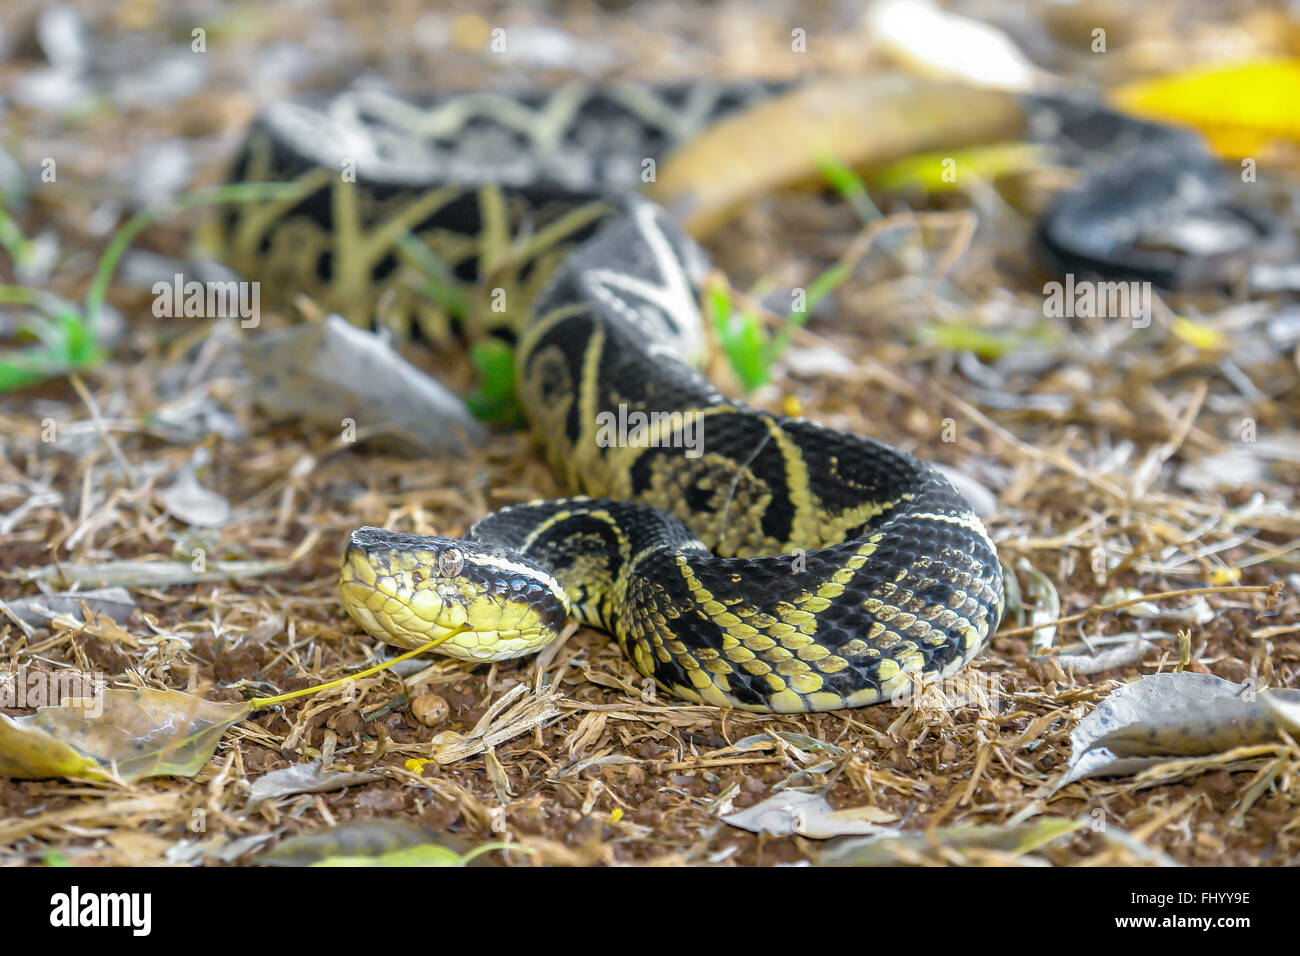 Niacanina south america dangerous snake Stock Photo